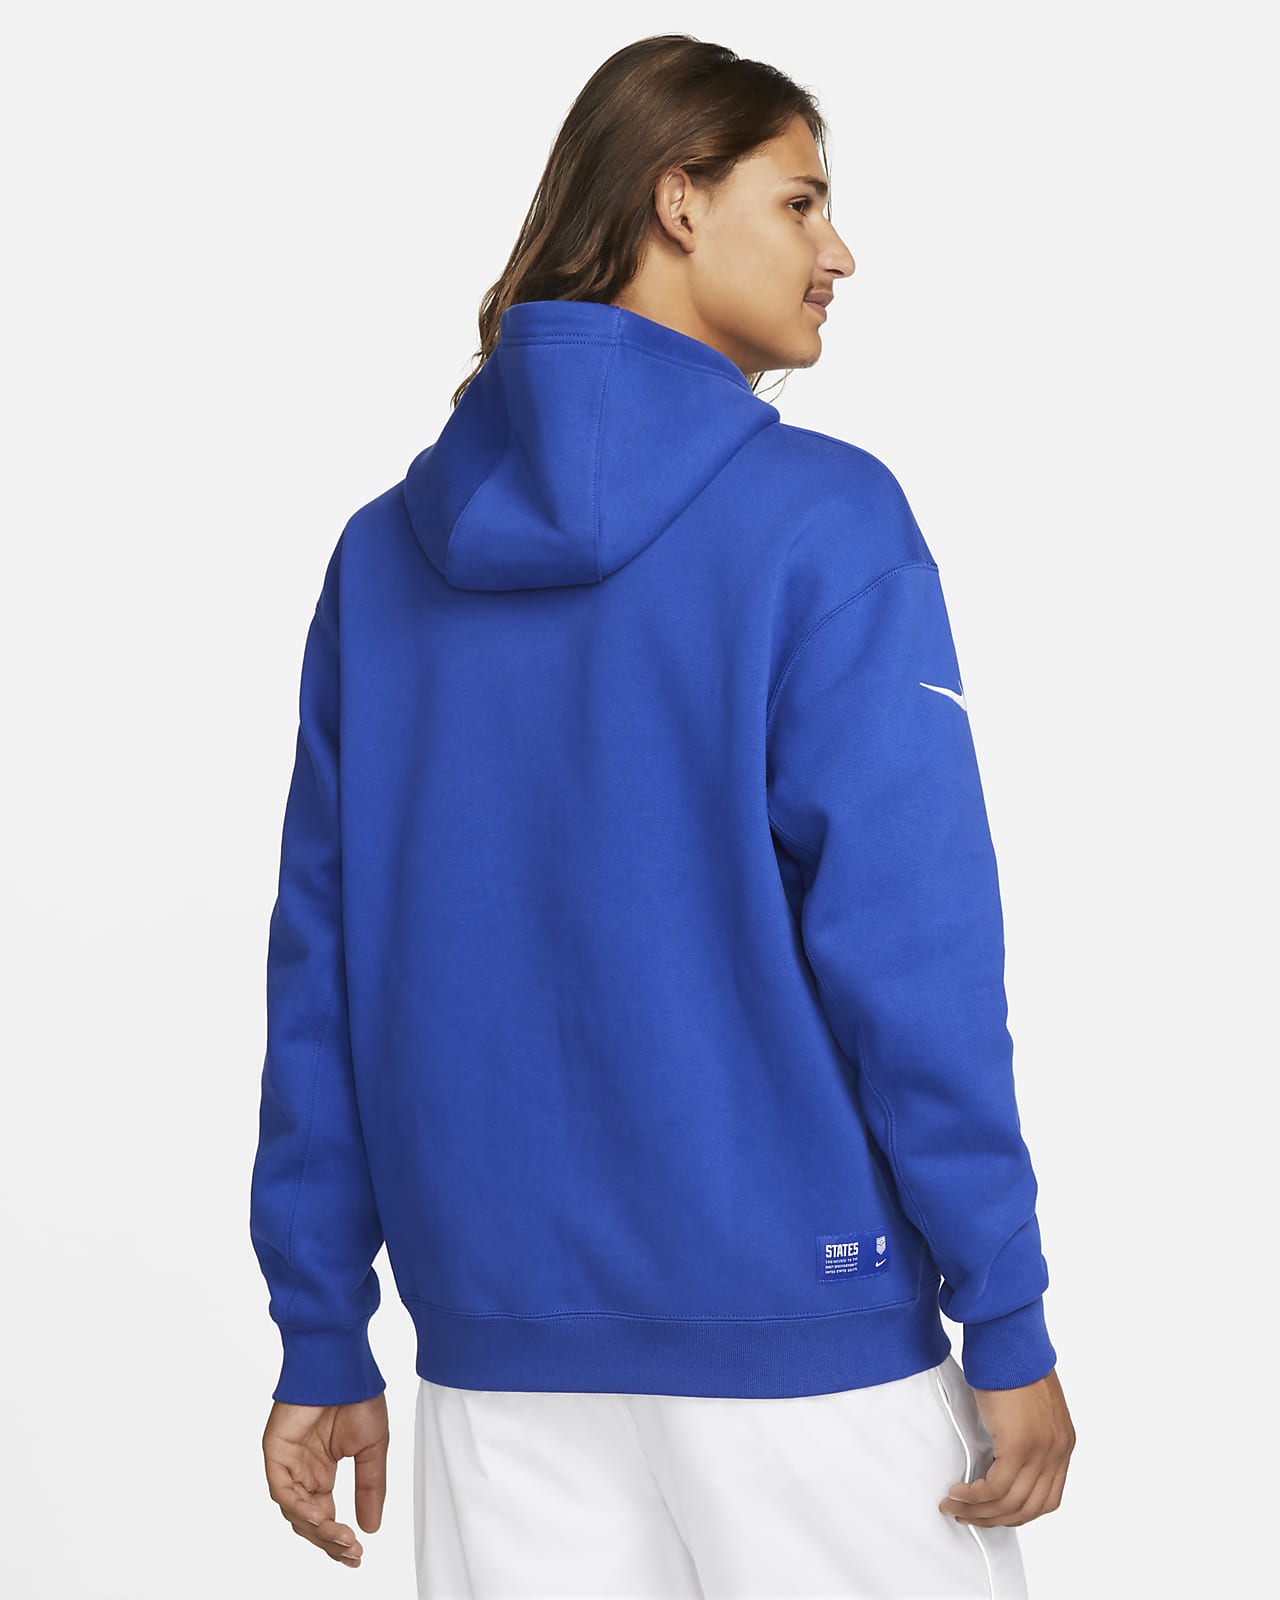 UNDER ARMOUR Dark Blue Hoodie/Sweatshirt w/Front Pocket Men’s Size L Large